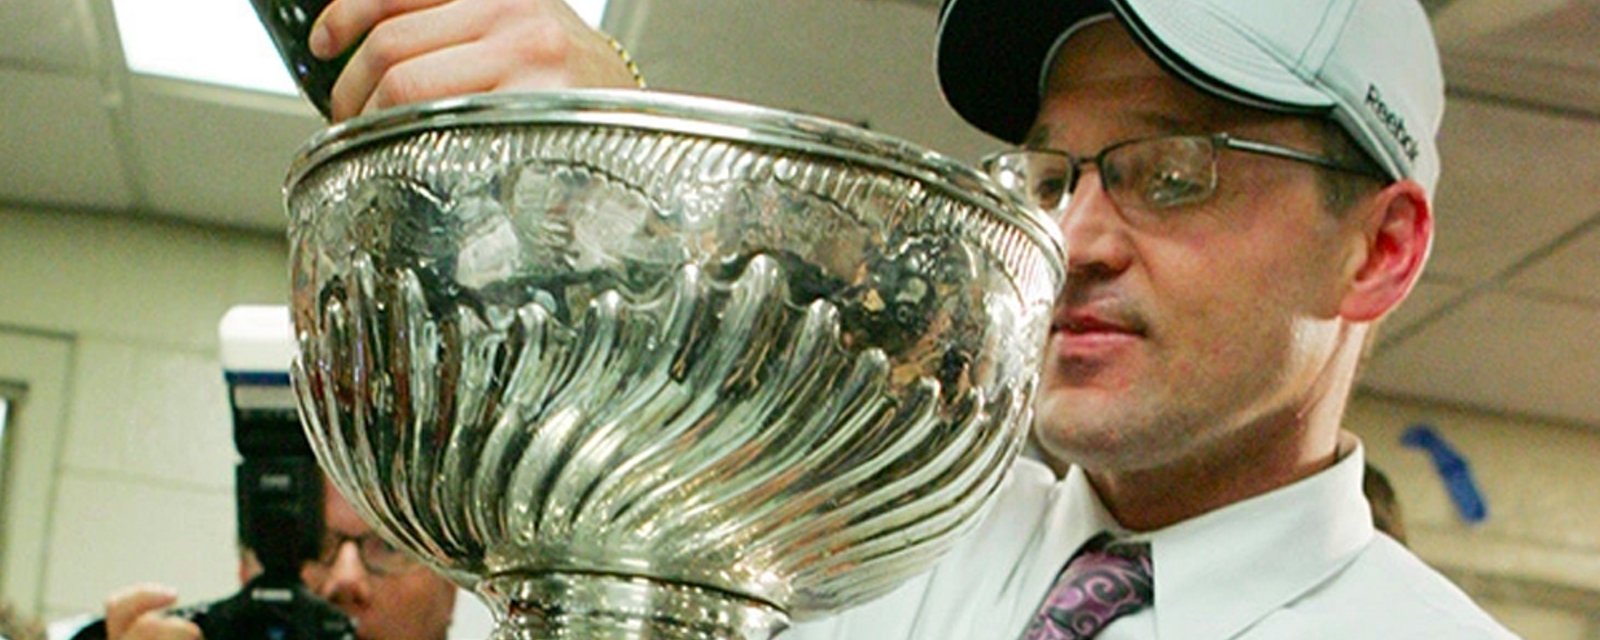 Kraken hire longtime NHL coach Dan Bylsma